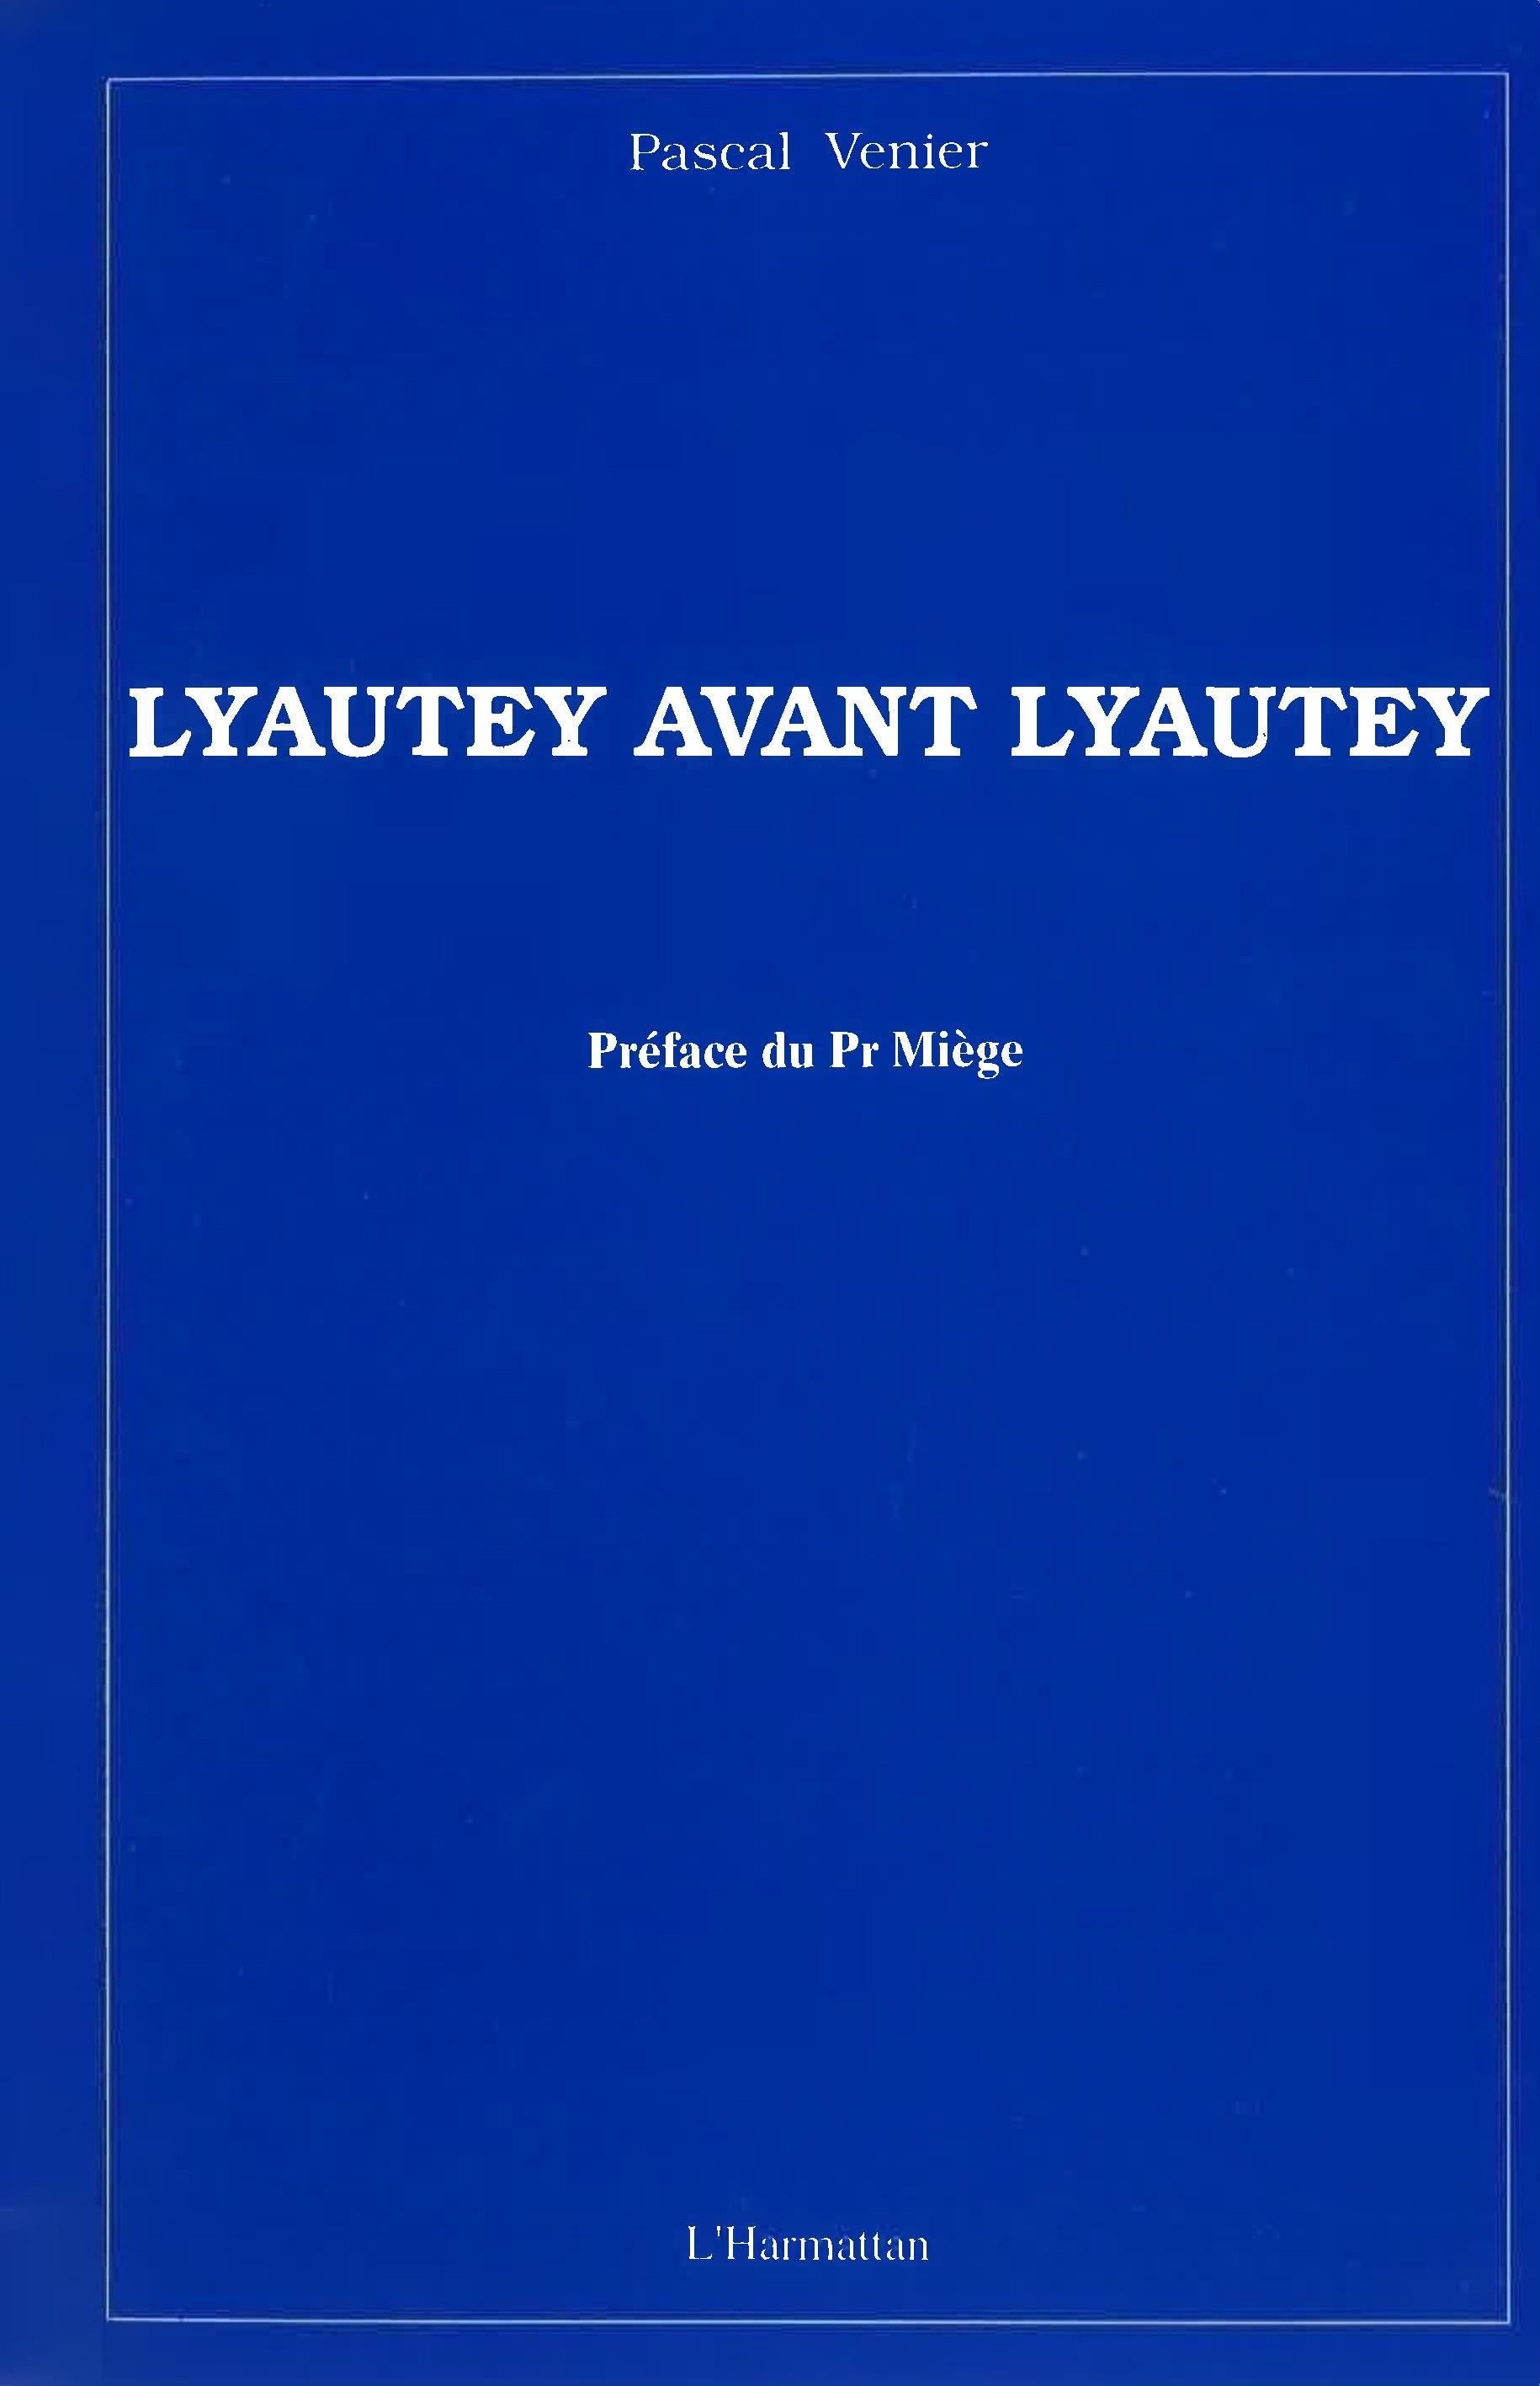 Lyautey avant Lyautey (9782738456748-front-cover)